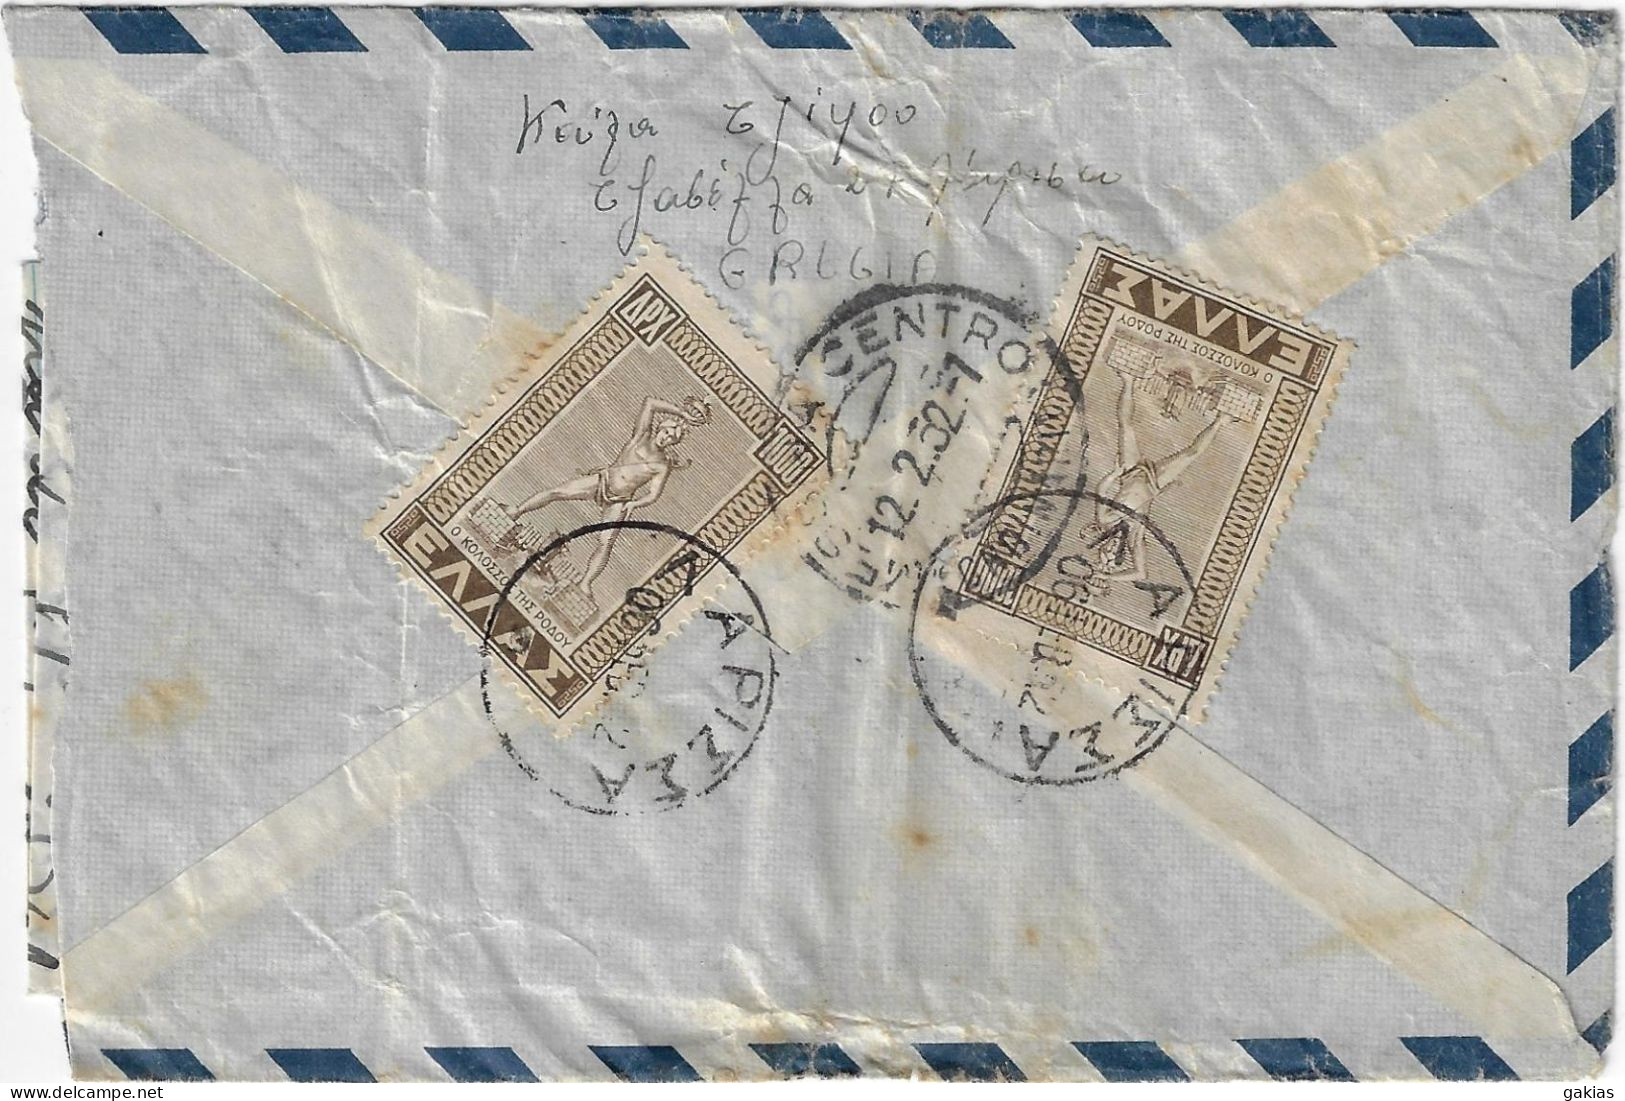 GREECE 1952 AIR COVER LARISSA TO MESSINA/ITALY. - Cartas & Documentos